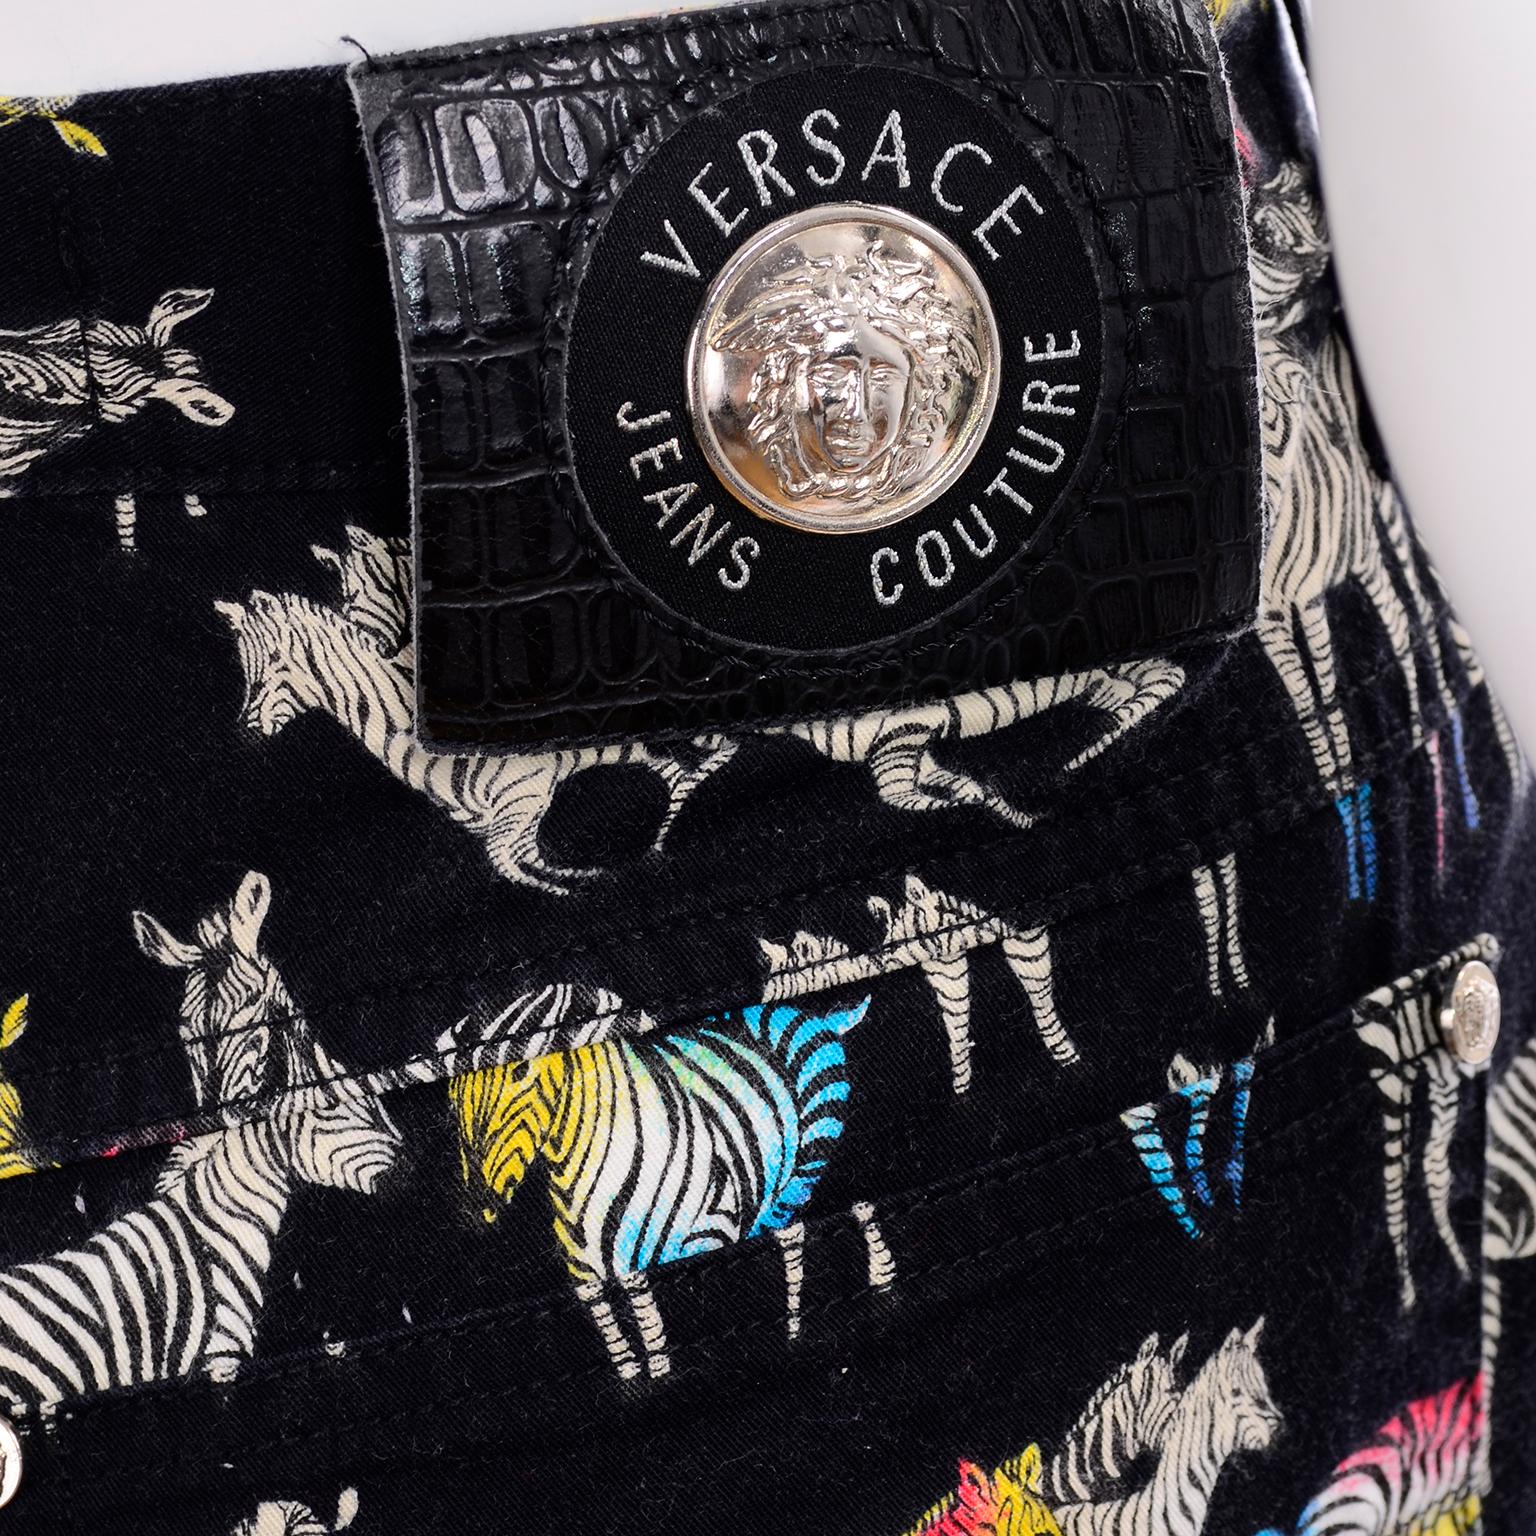 1990s Vintage Versace Jeans Couture Black Pants in Ombre Rainbow Zebra Print For Sale 6